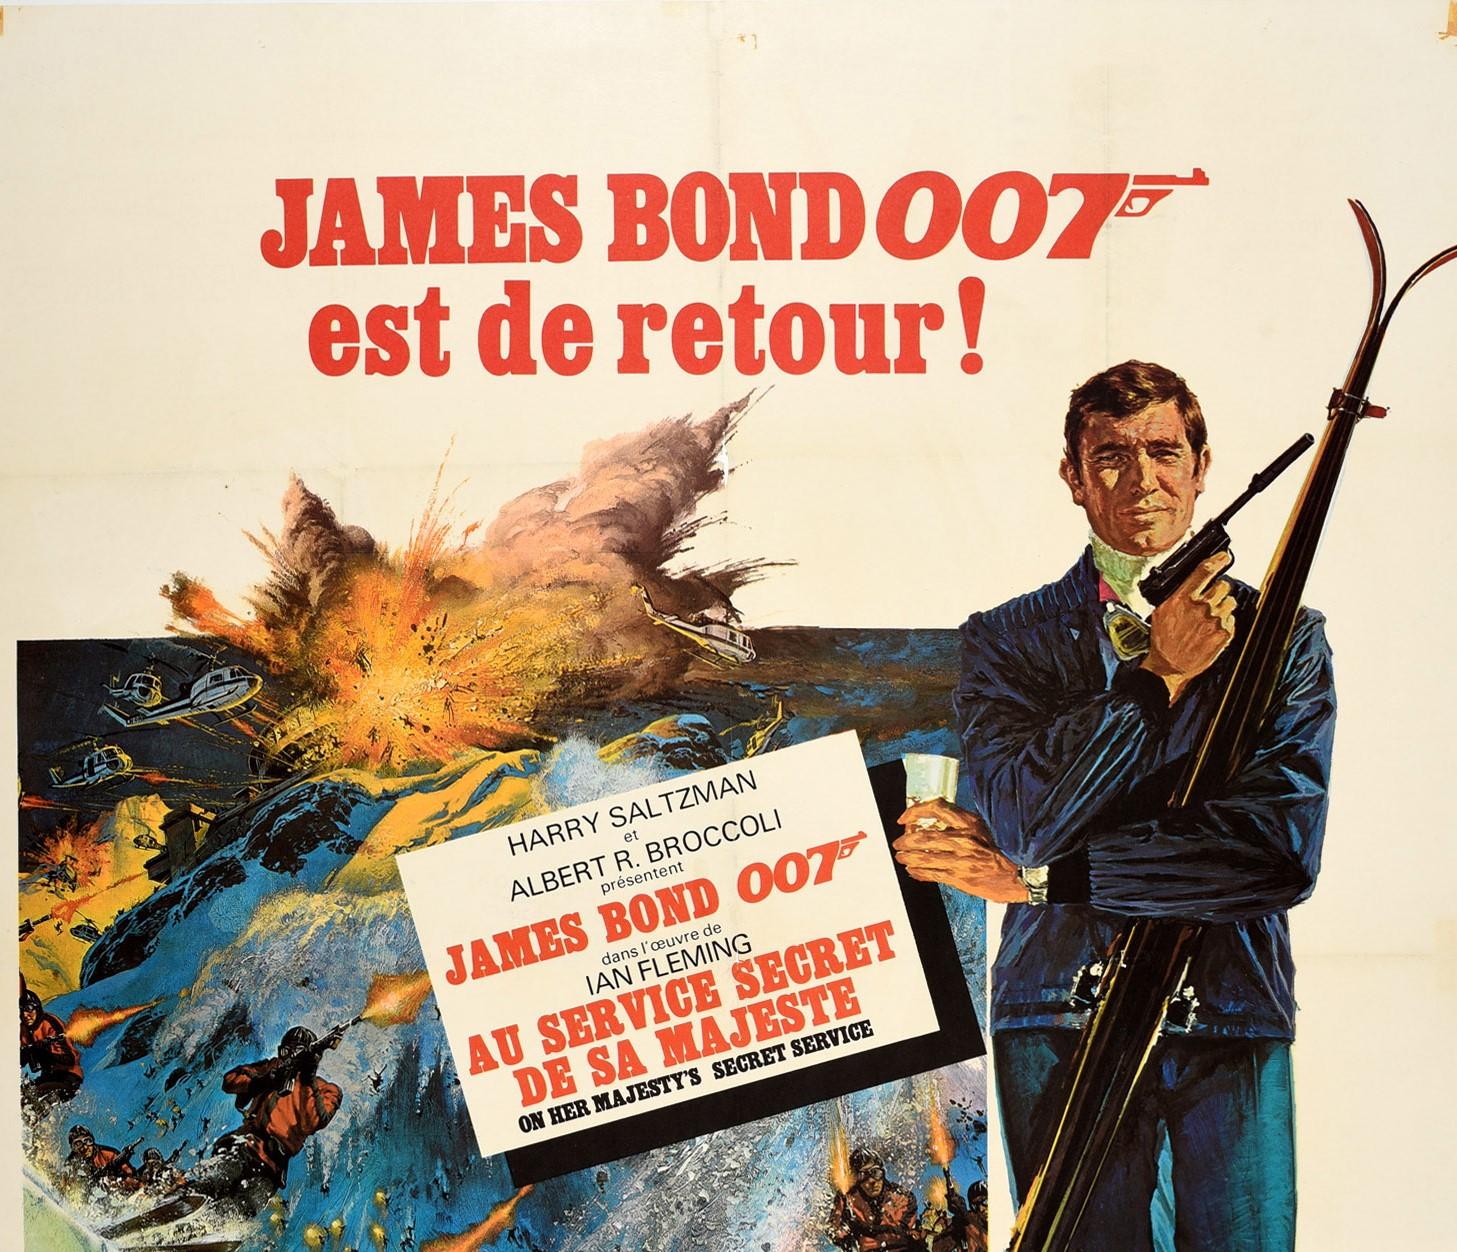 Original Vintage Film Poster James Bond On Her Majesty's Secret Service 007 Skis - Print by Yves Thos / Robert E. McGinnis